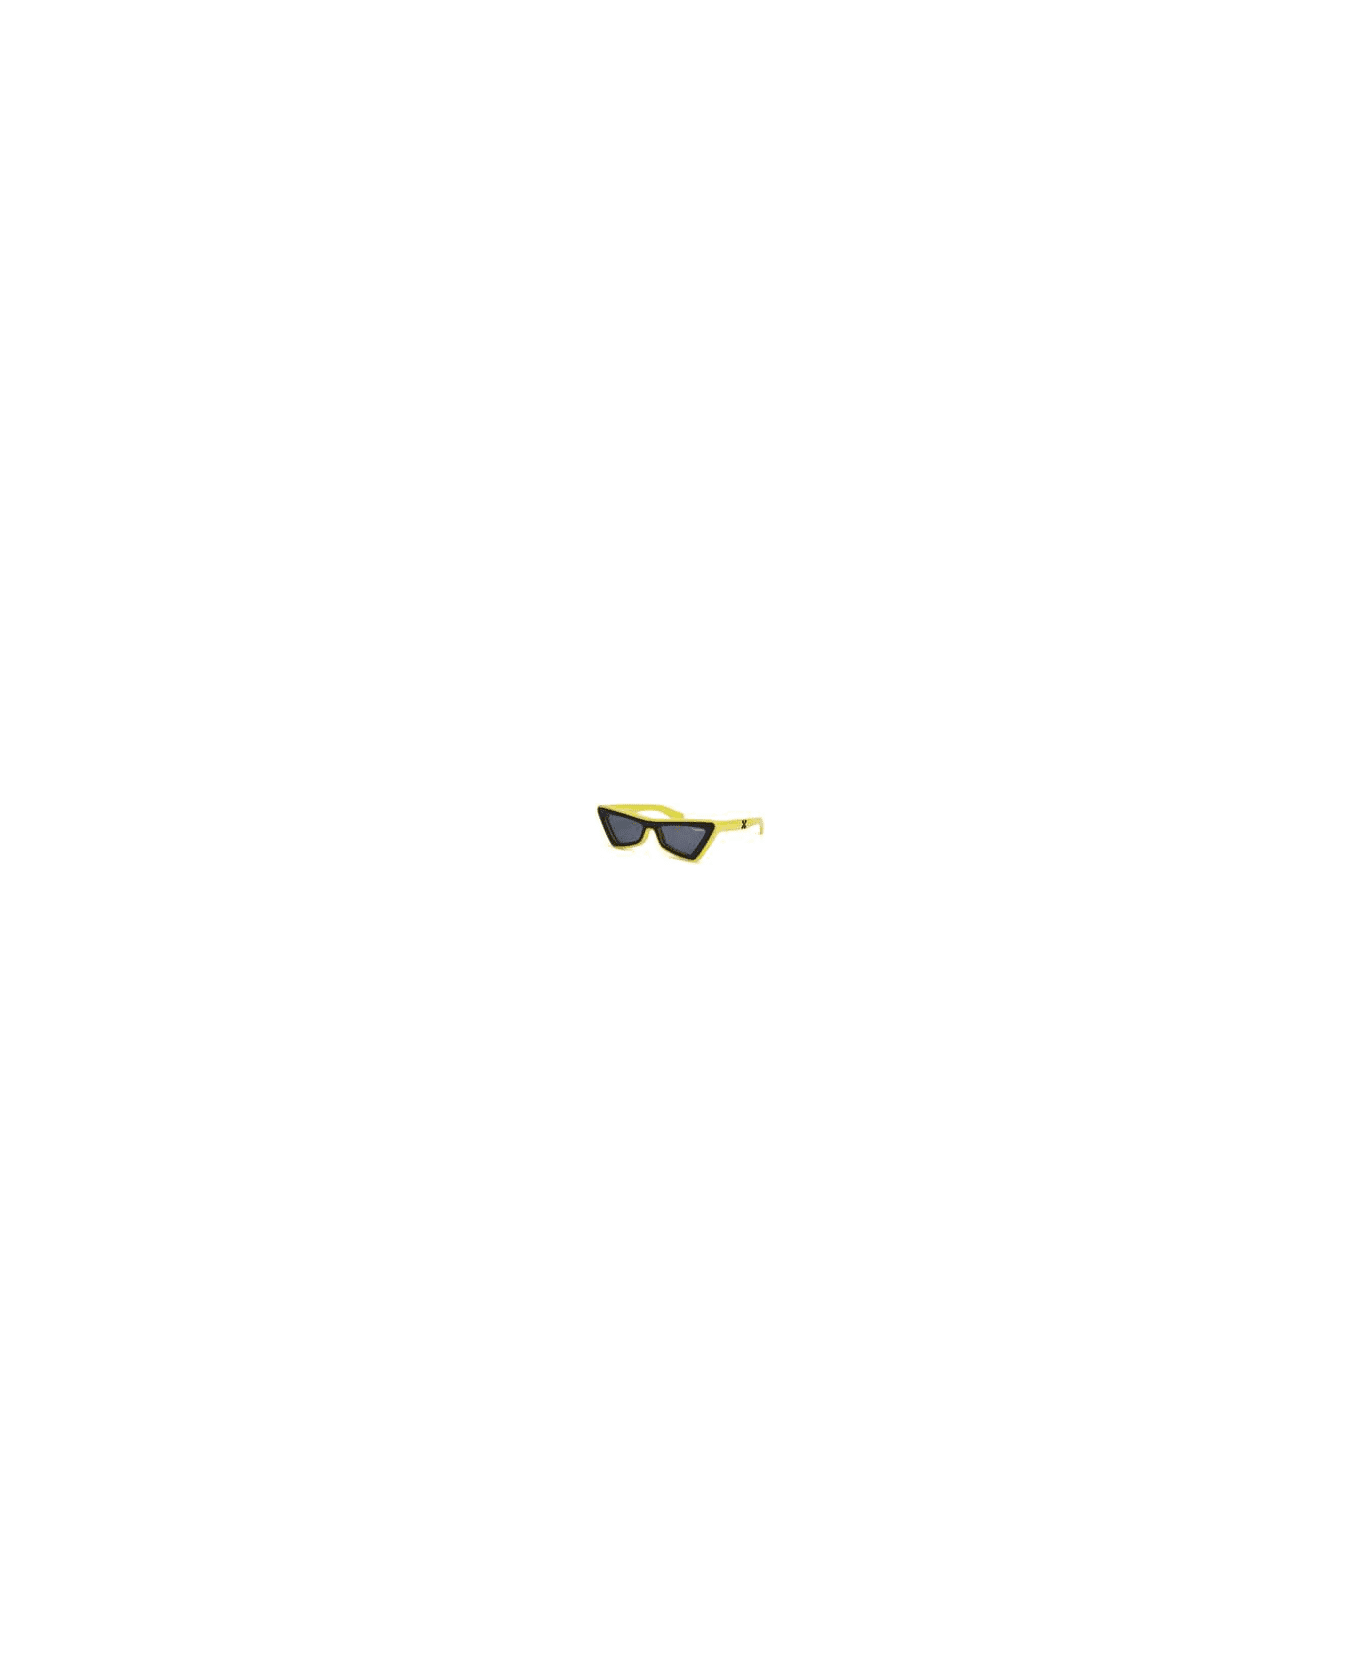 Off-White ARTEMISIA SUNGLASSES Sunglasses - Yellow